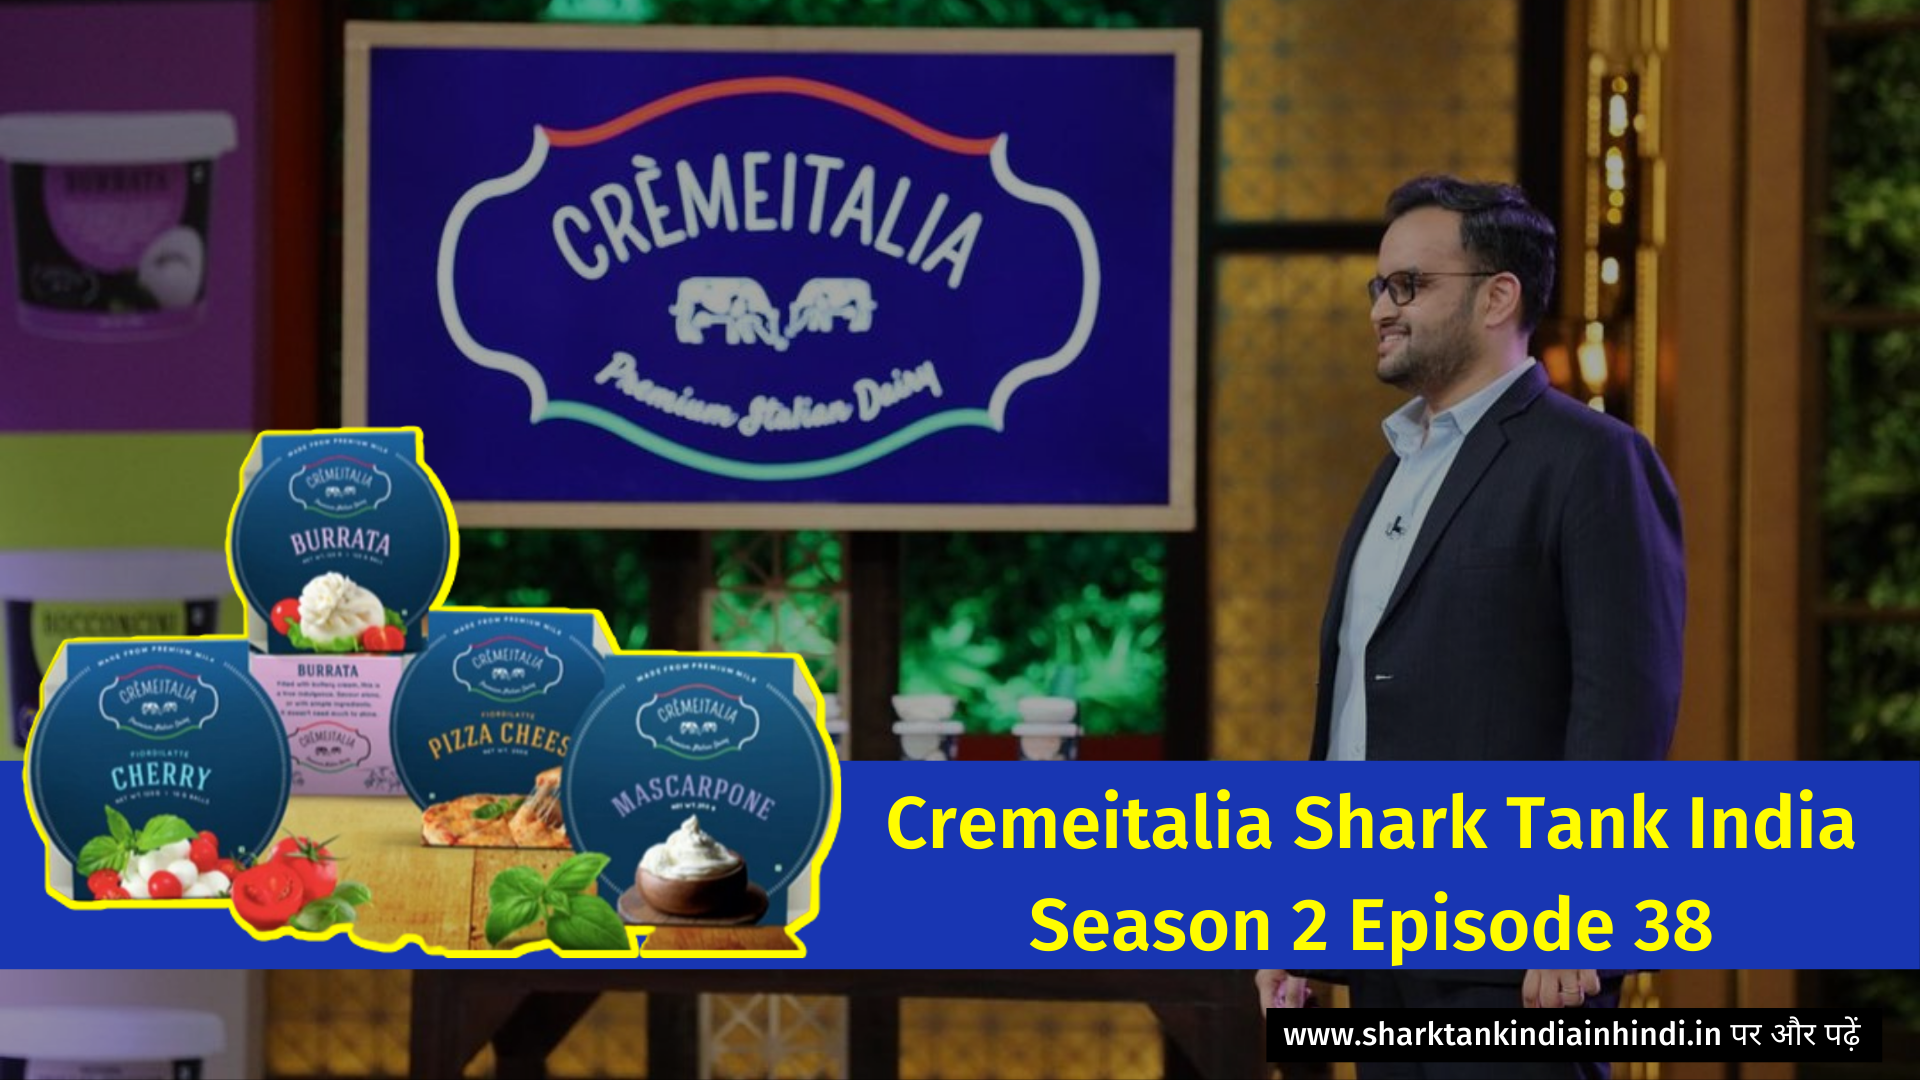 Cremeitalia Shark Tank India Season 2 Episode 38